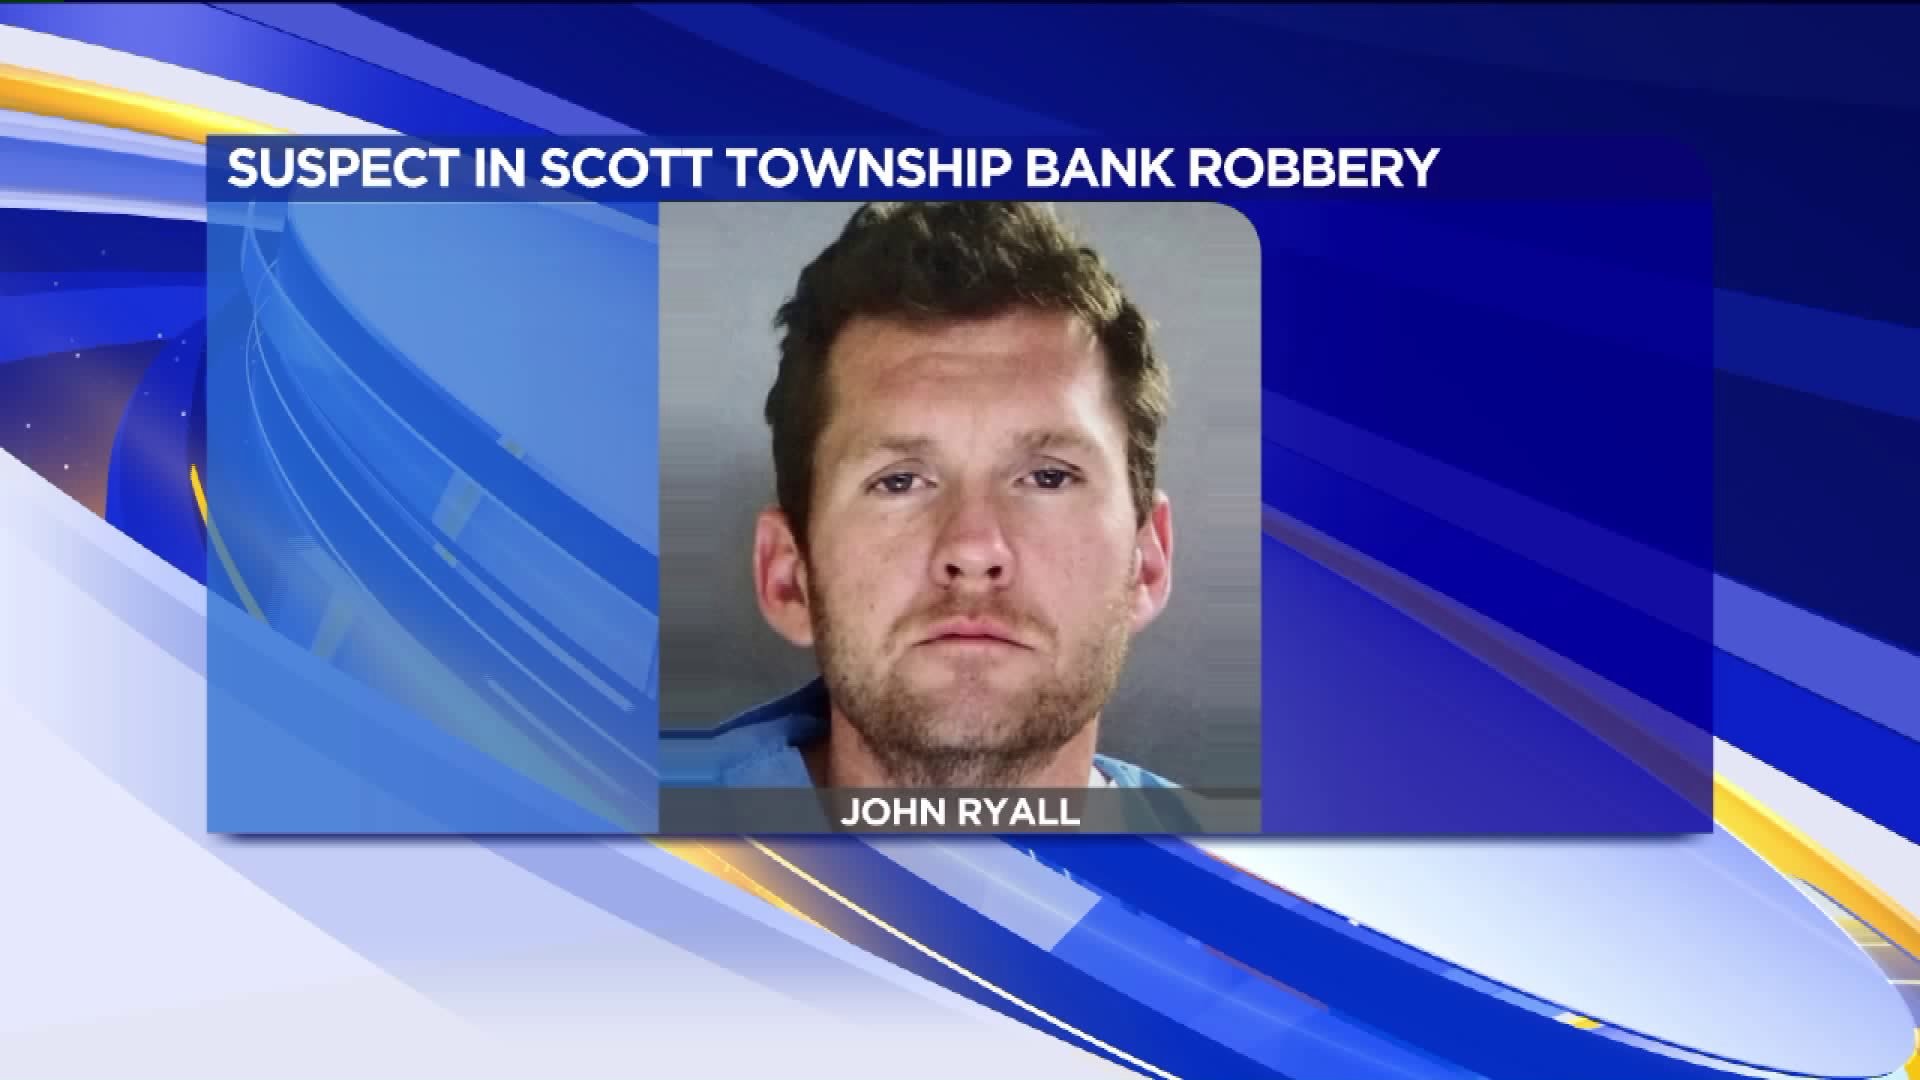 Customer Tackles Would-be Bank Robbery in Lackawanna County